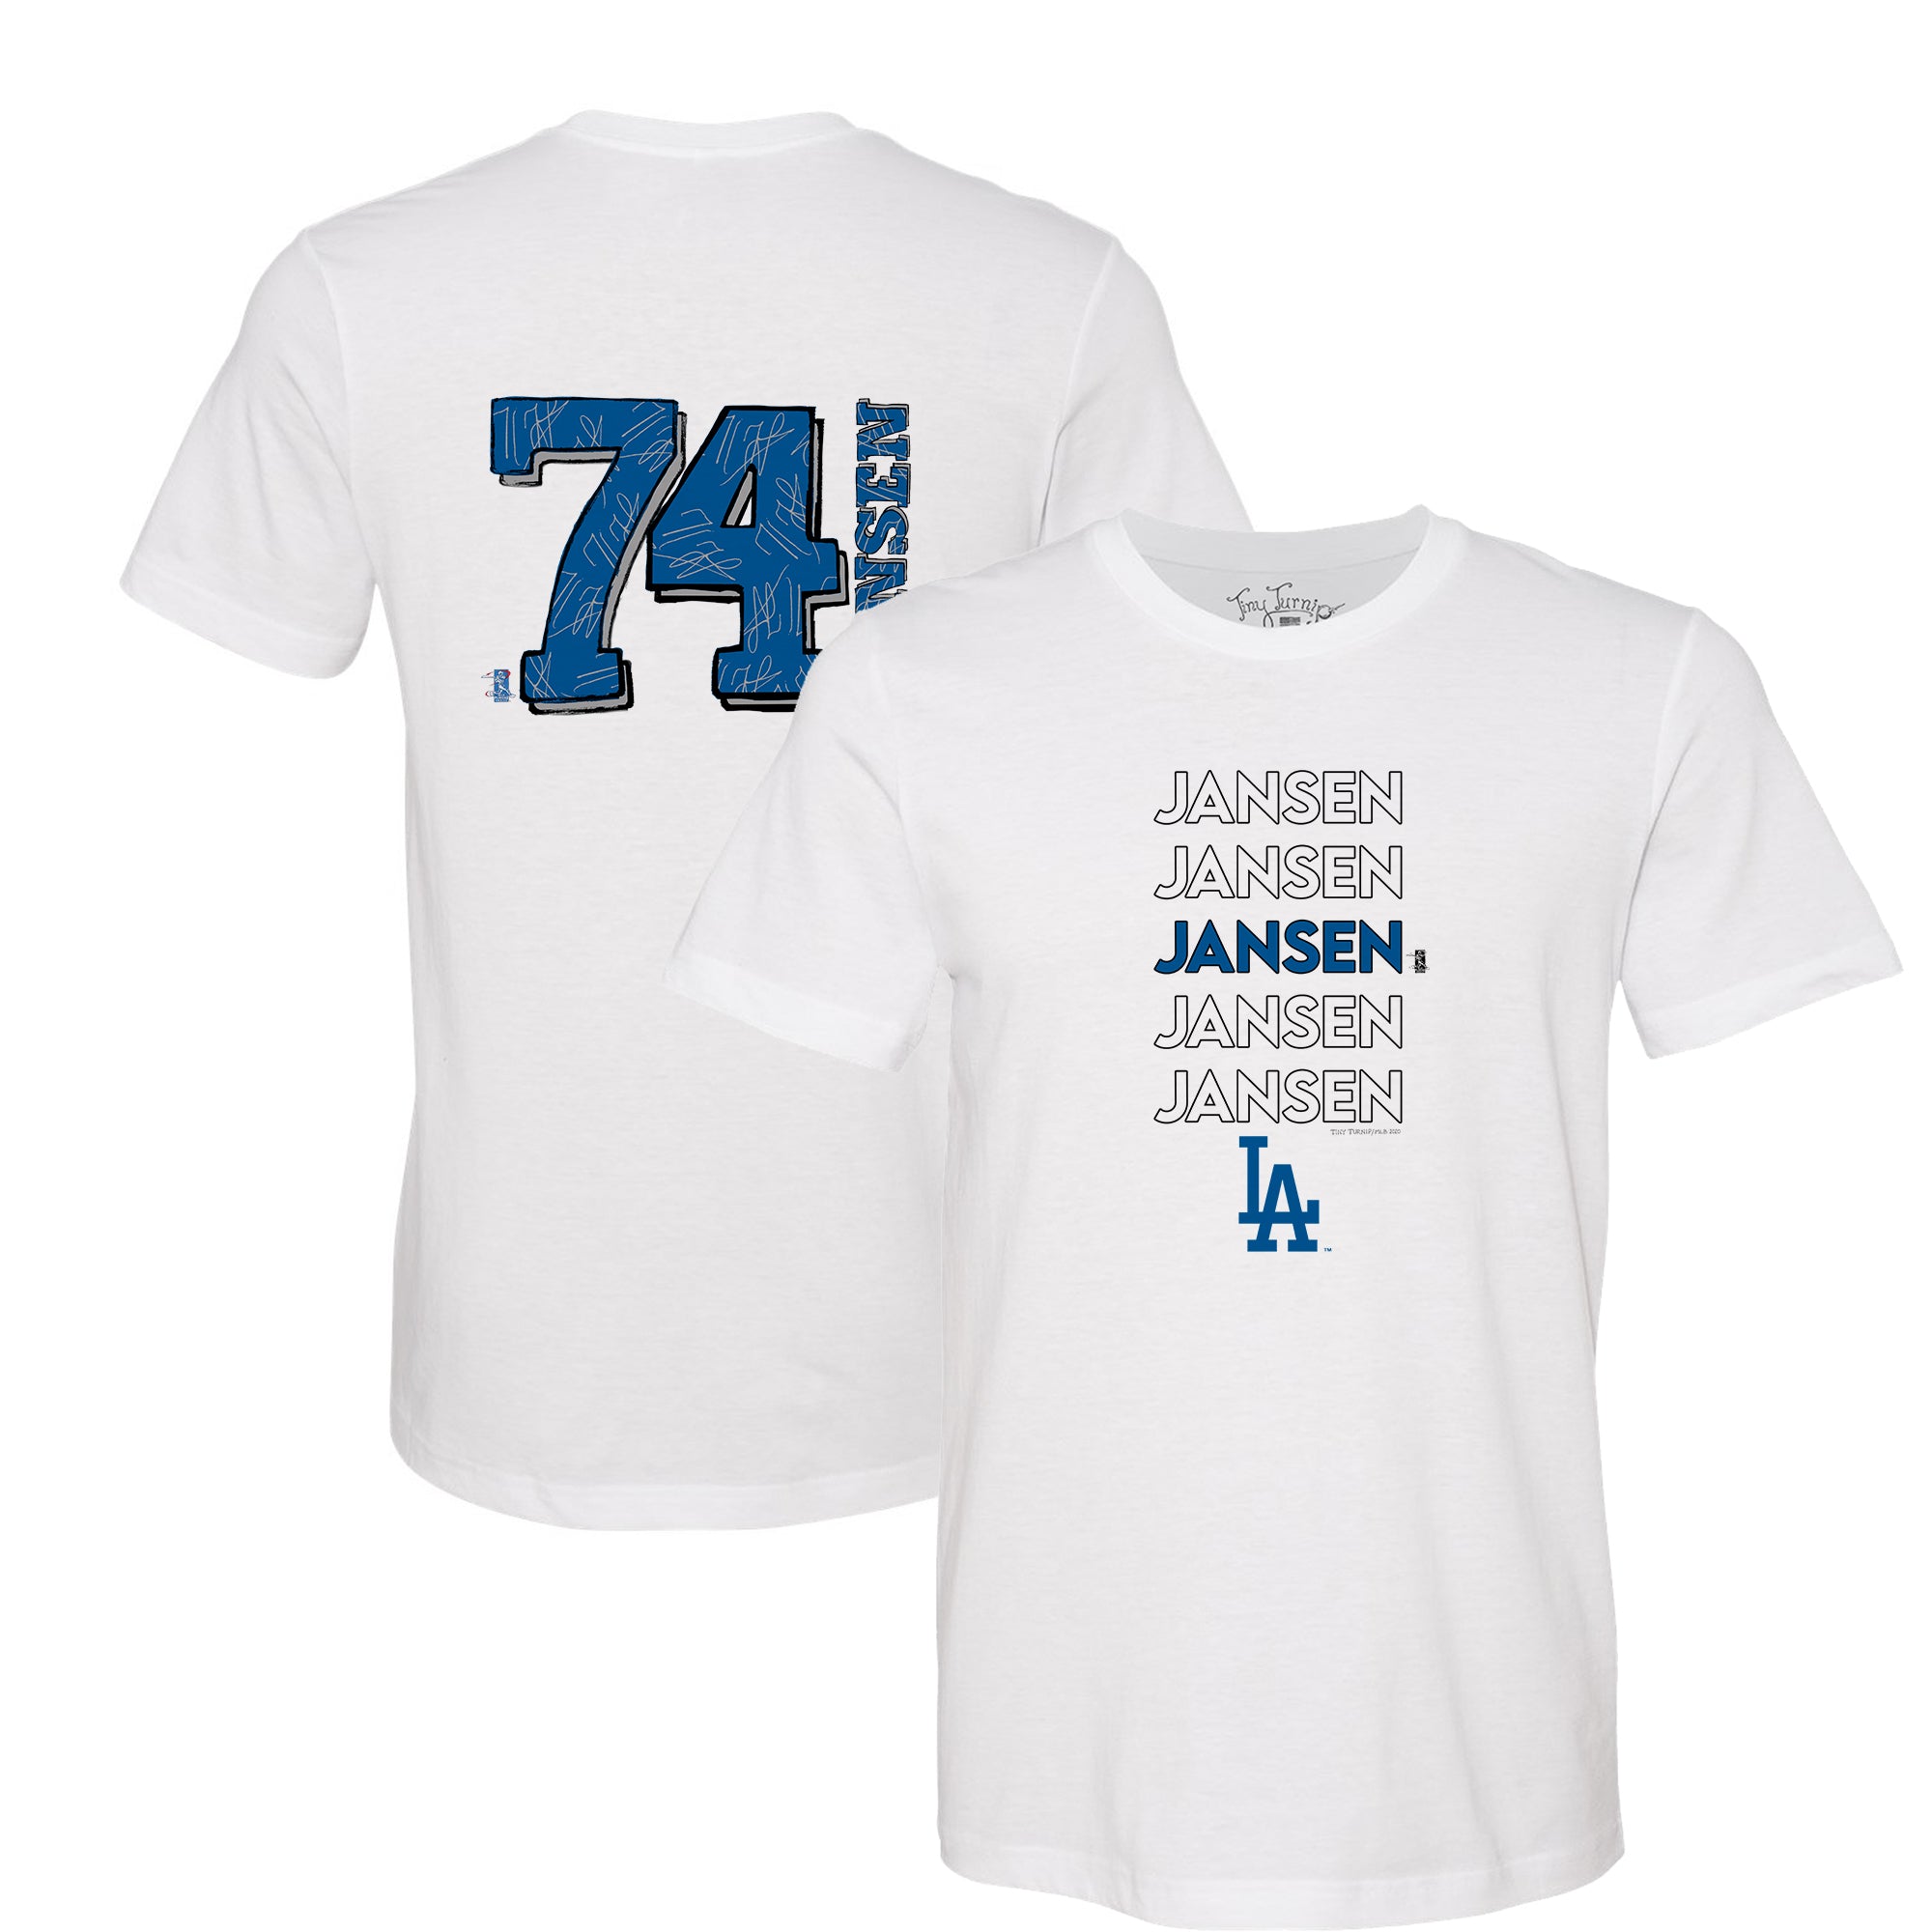 Kenley Jansen Jersey  Dodgers Kenley Jansen Jerseys - Los Angeles Dodgers  Store